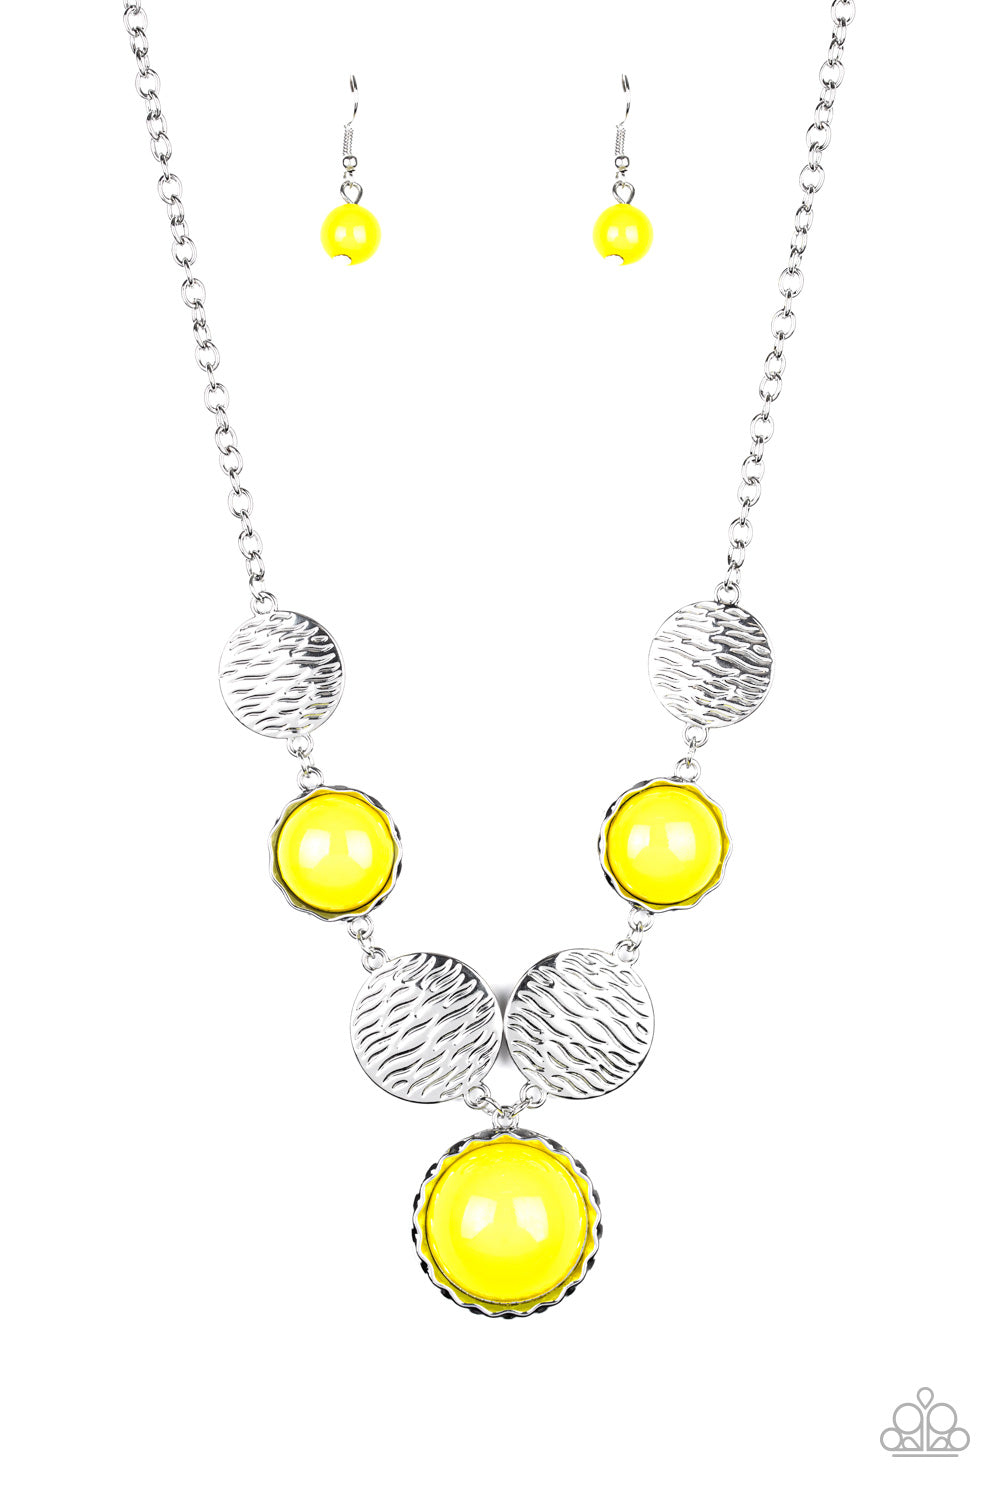 Bohemian Bombshell Yellow
Necklace - Daria's Blings N Things